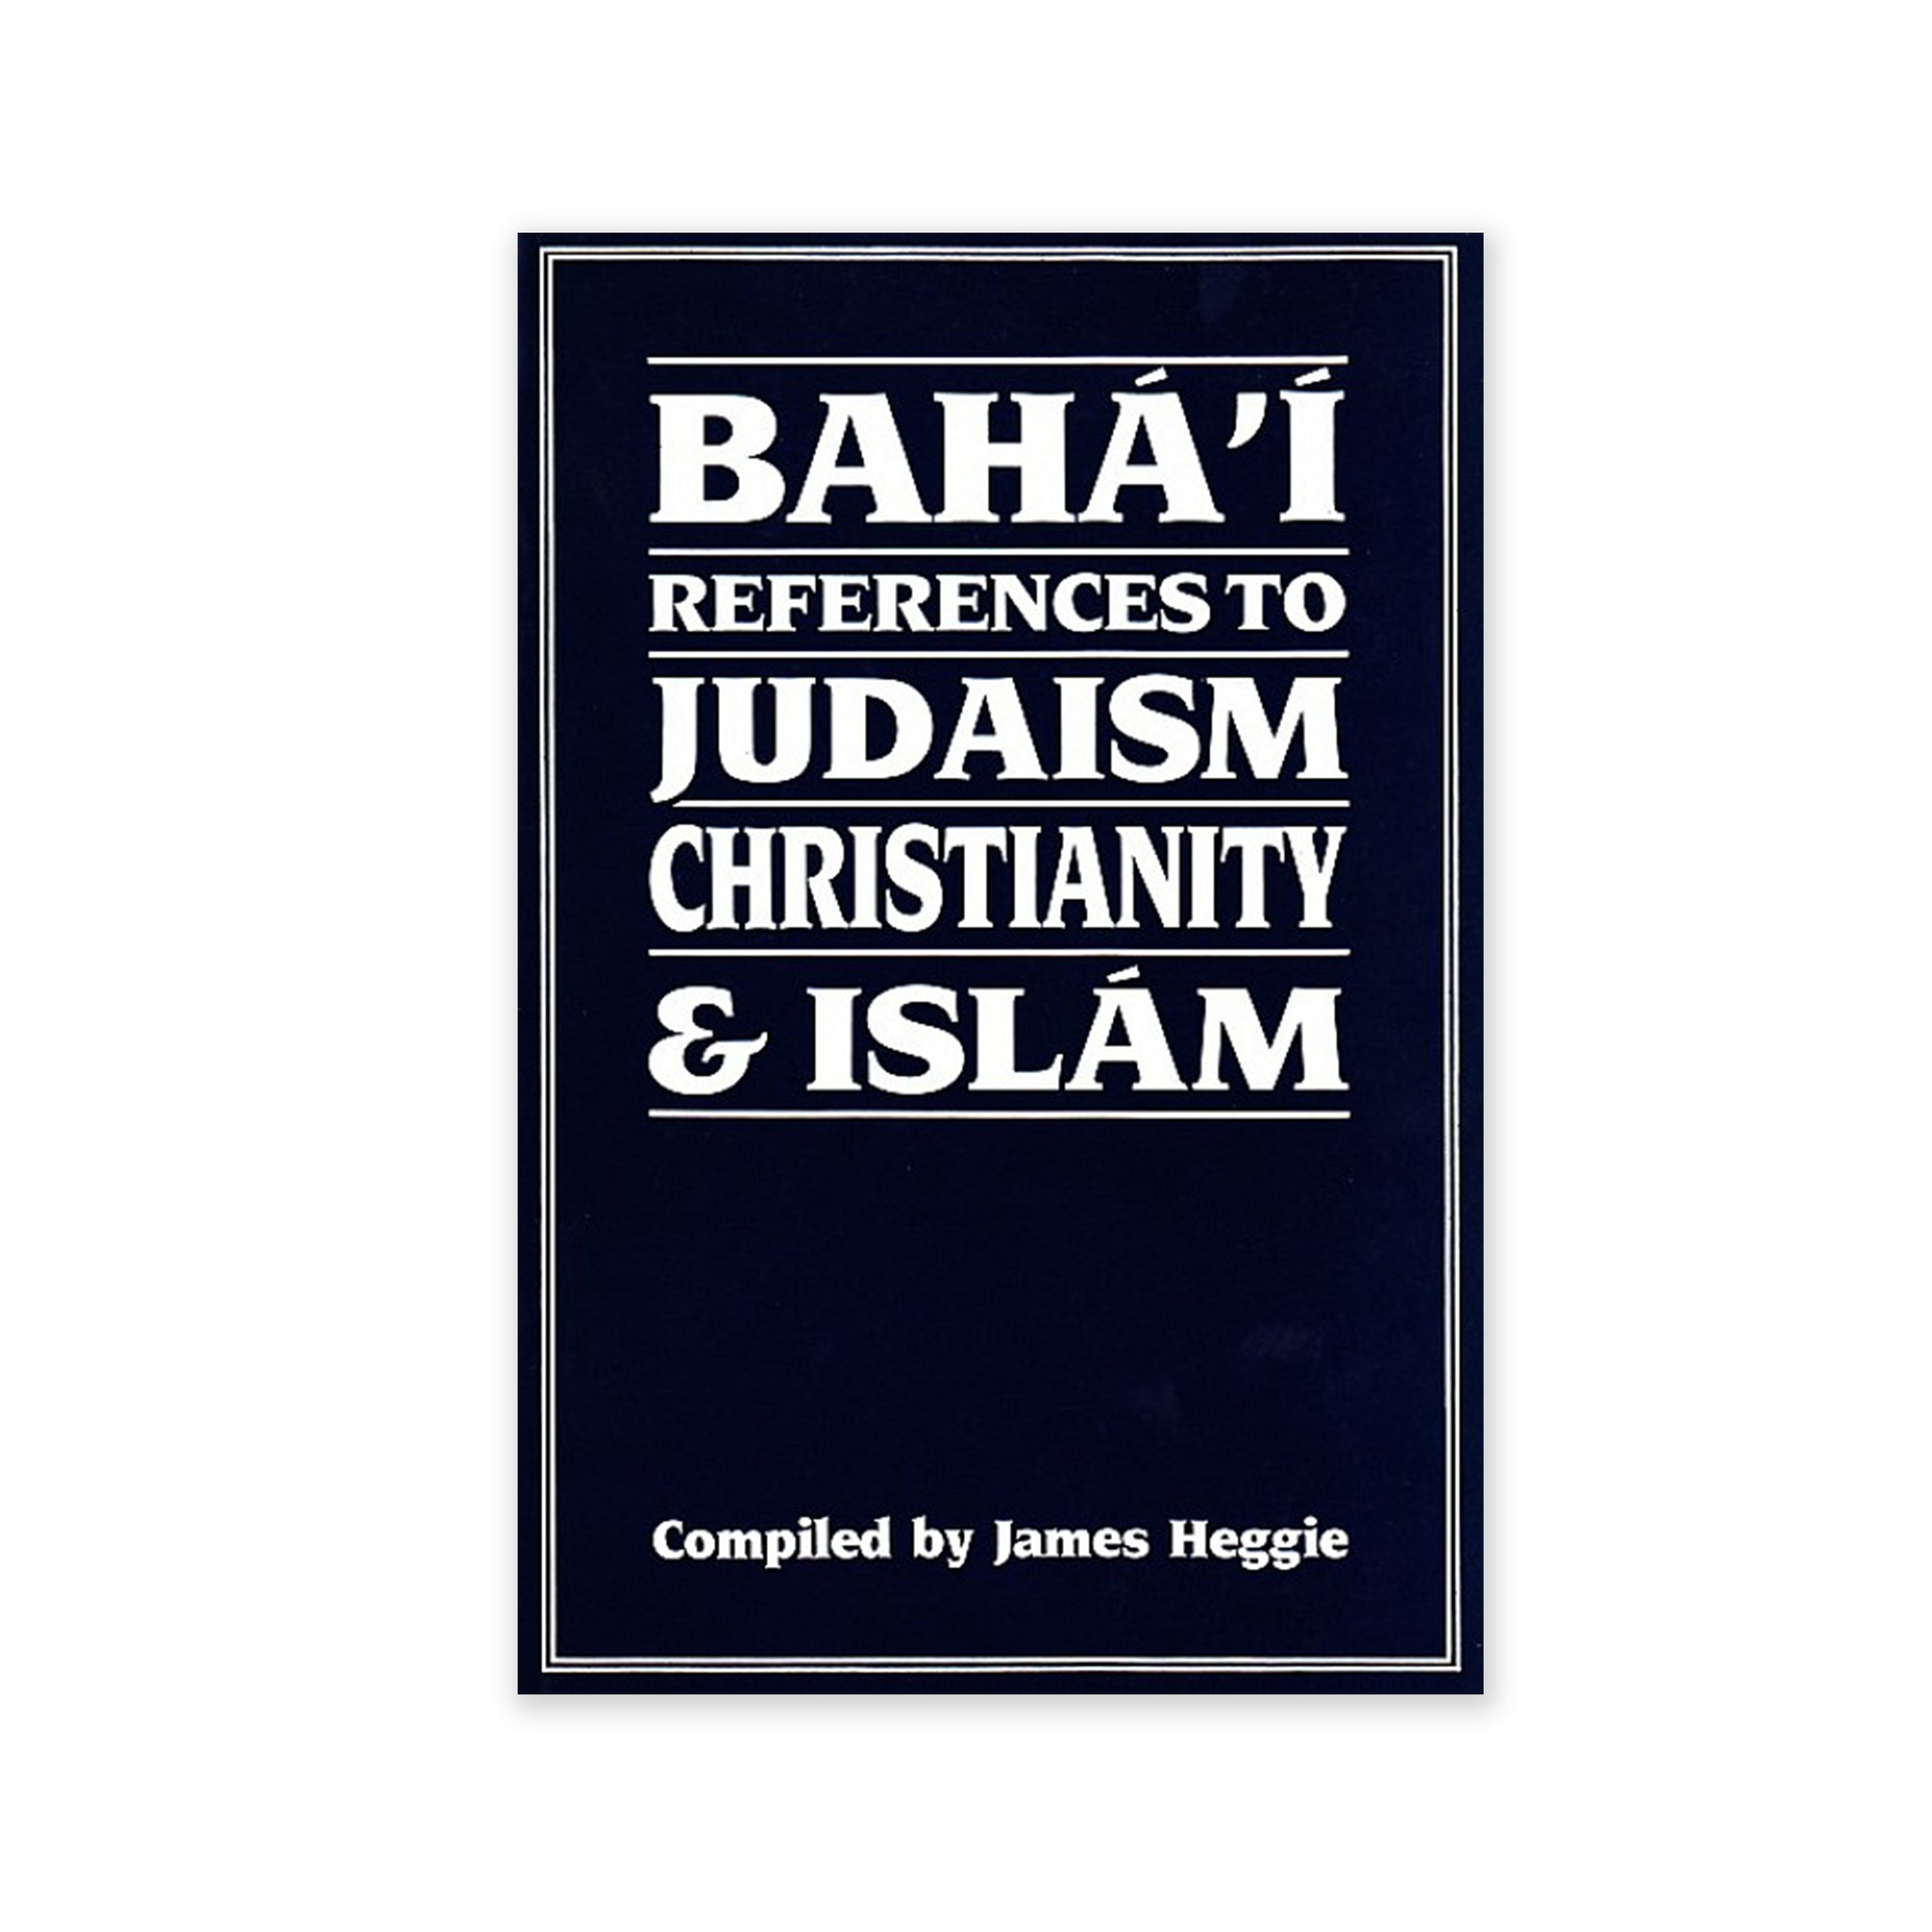 Baha'i References to Judaism, Christianity & Islam